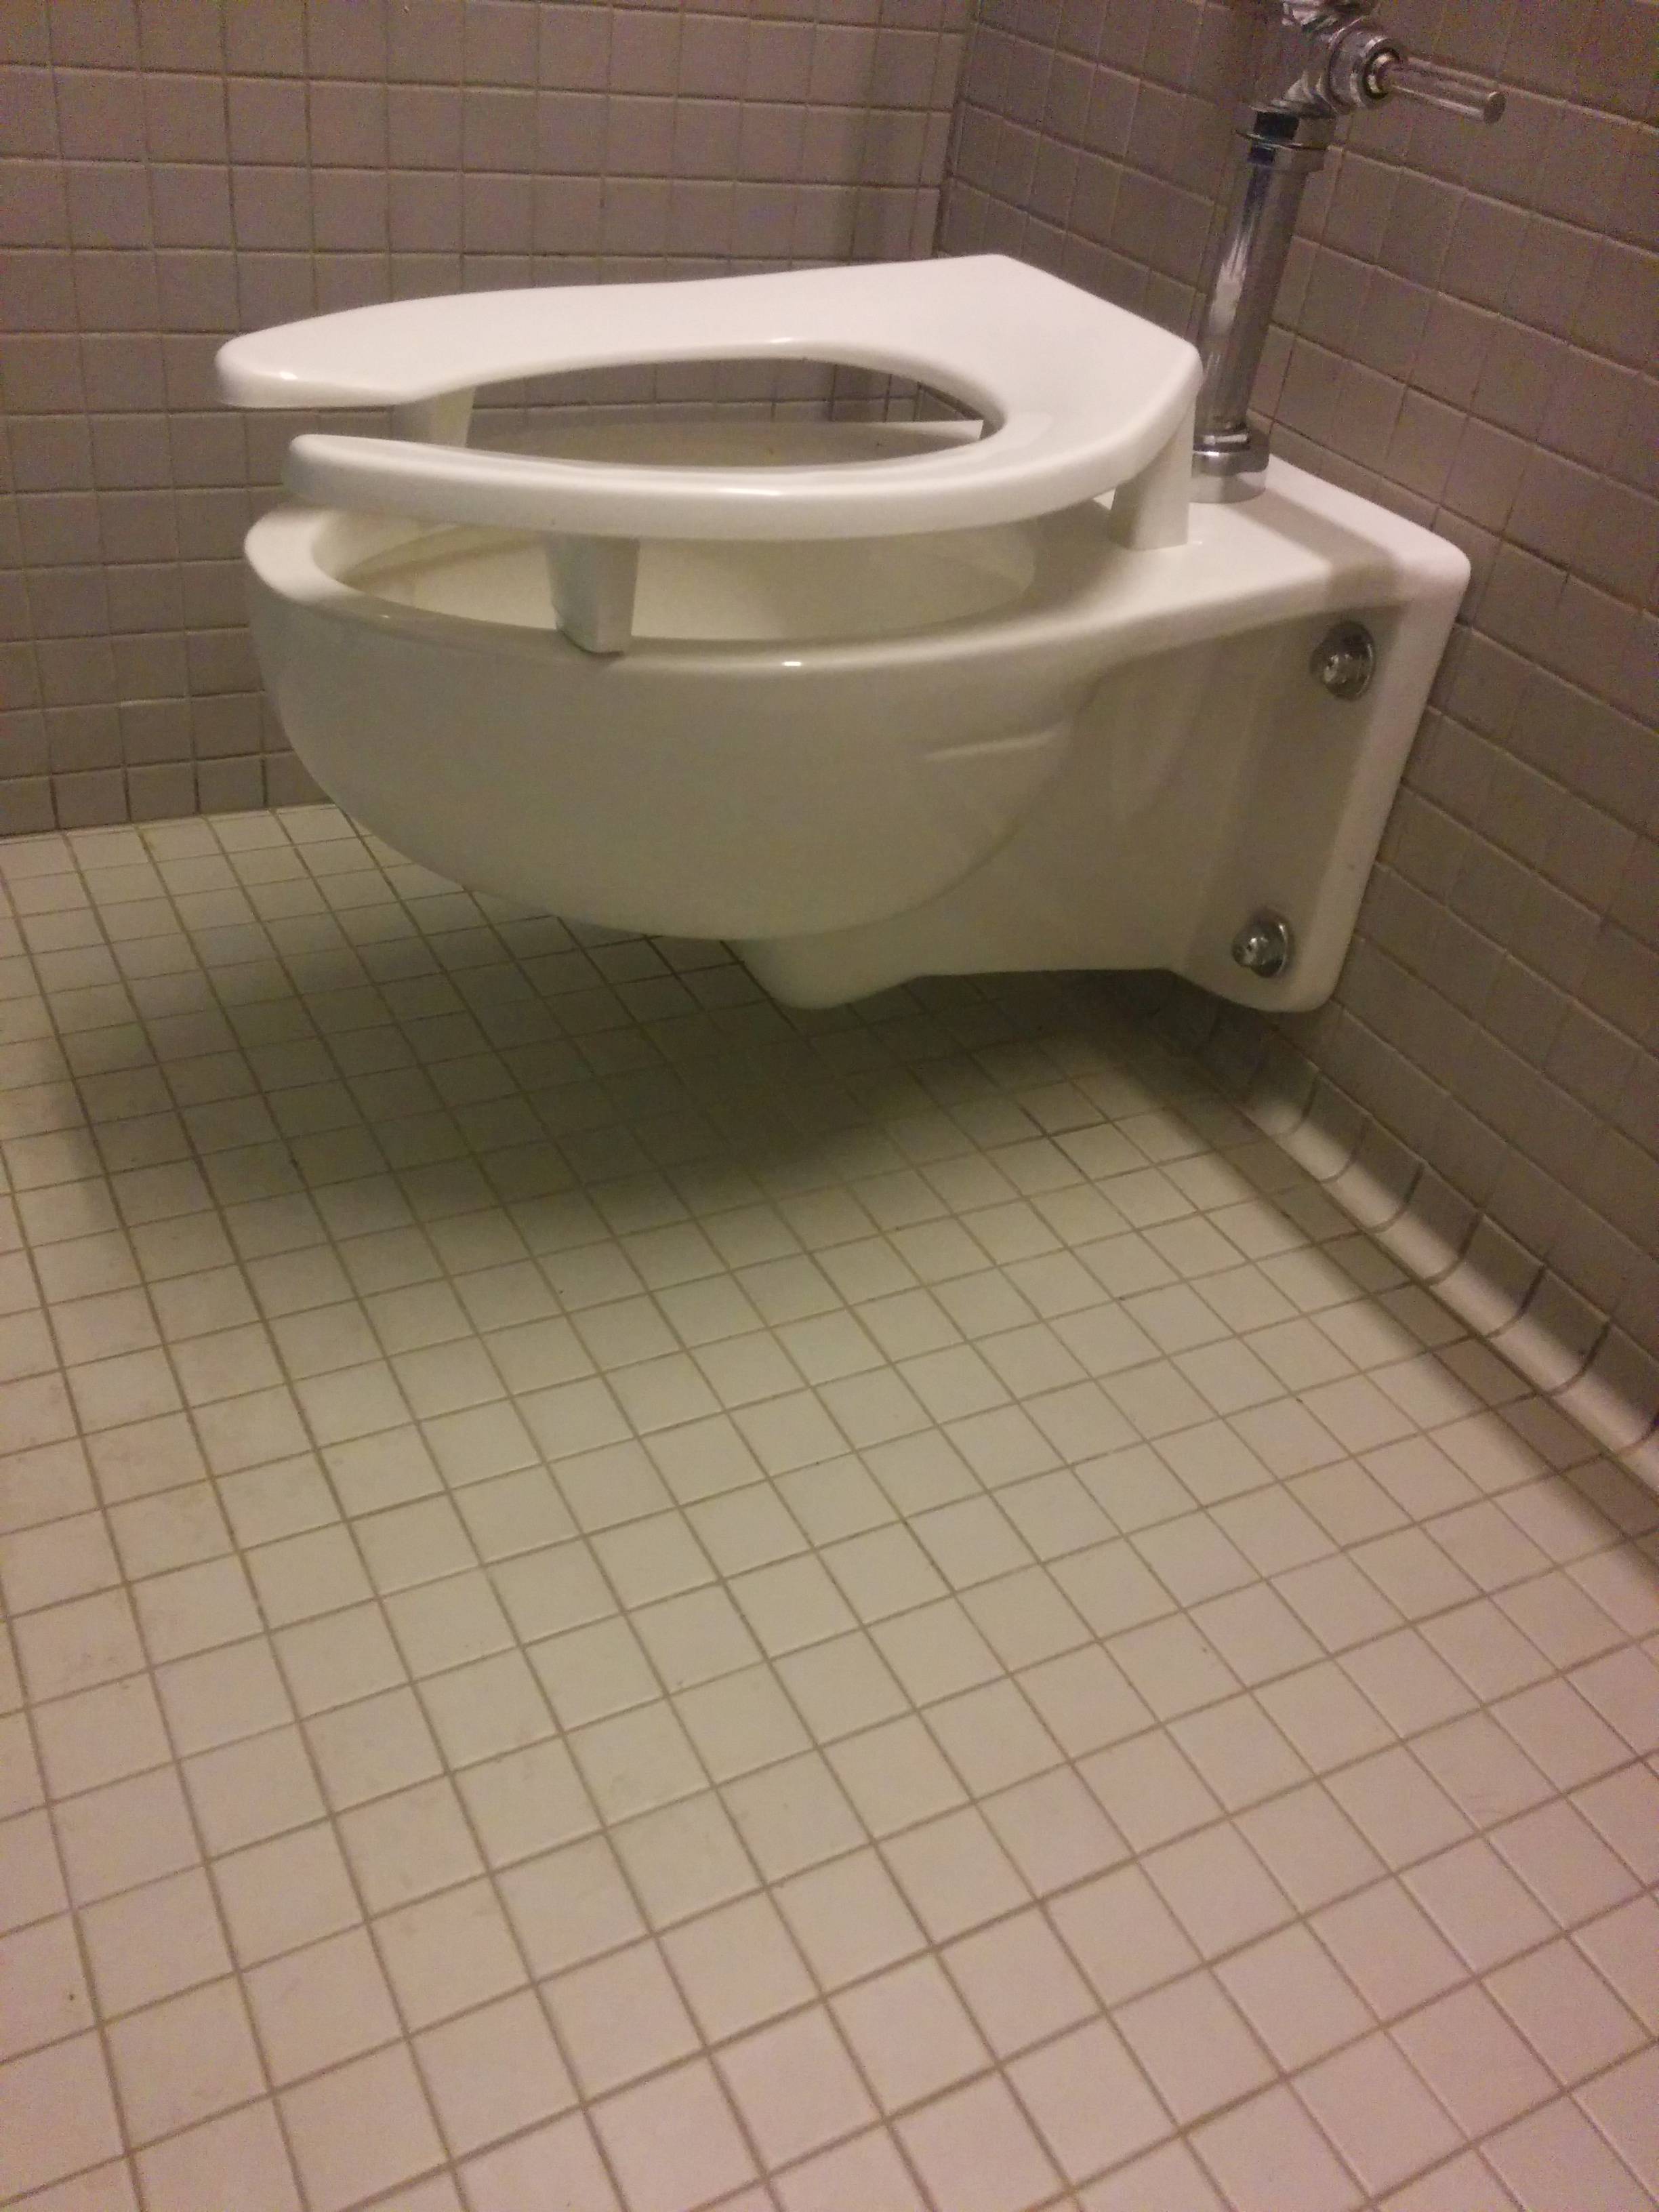 big dick problems toilet